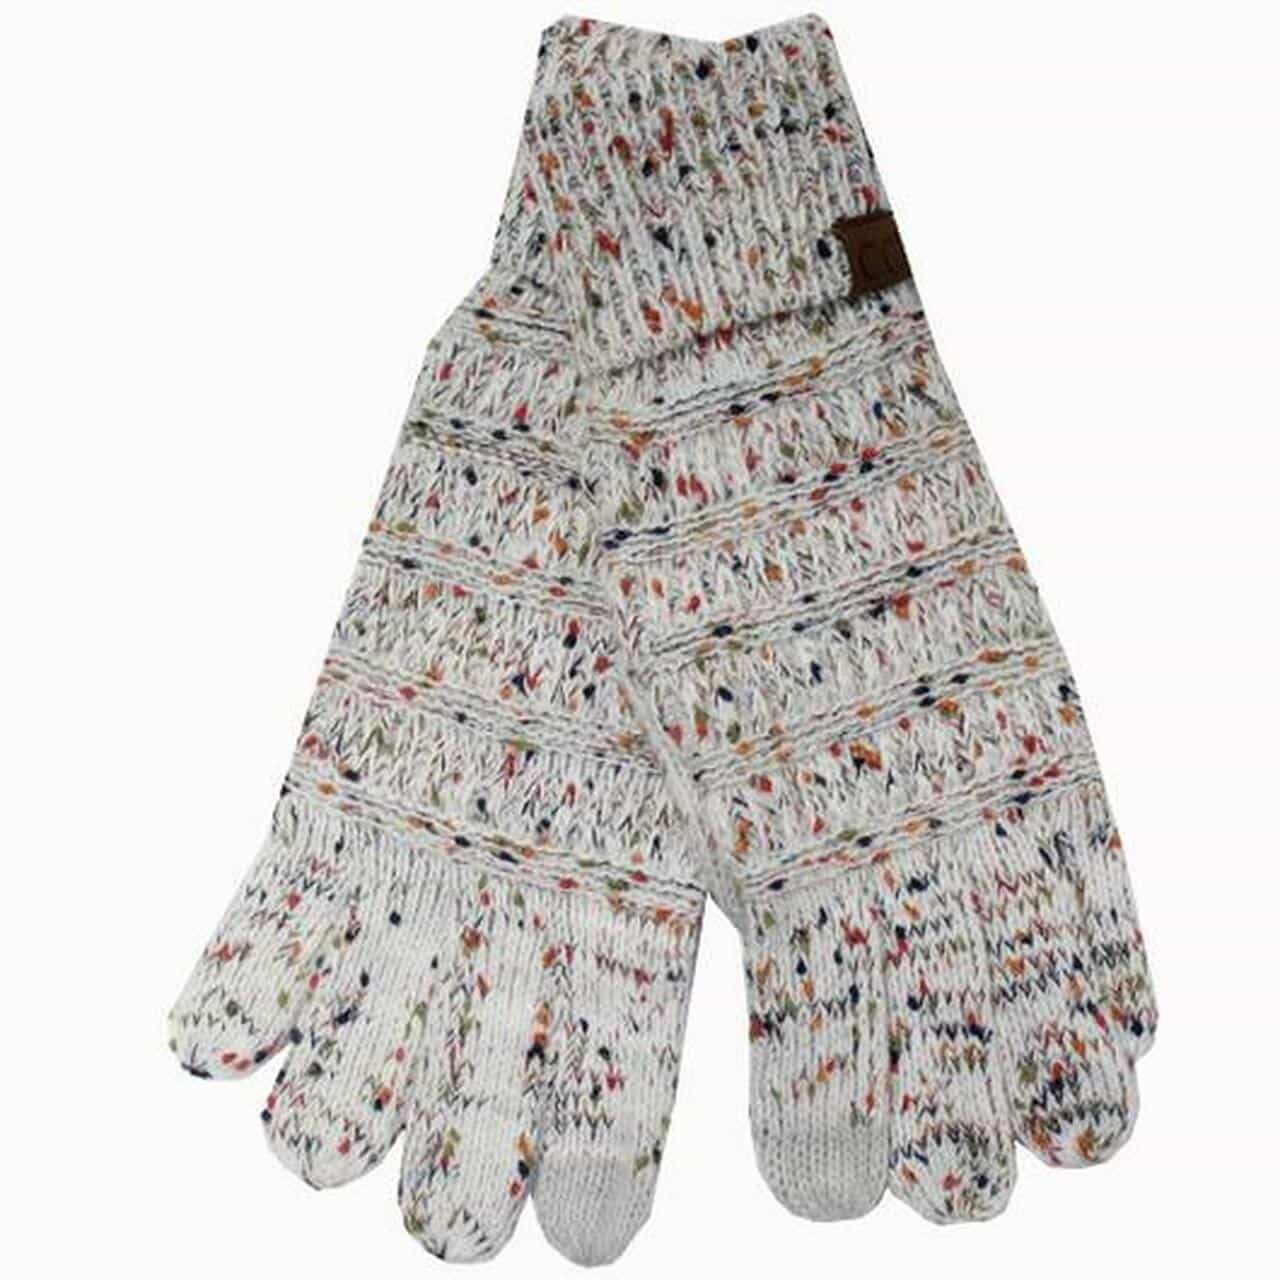 C.C. Brand Ivory Speckled Gloves